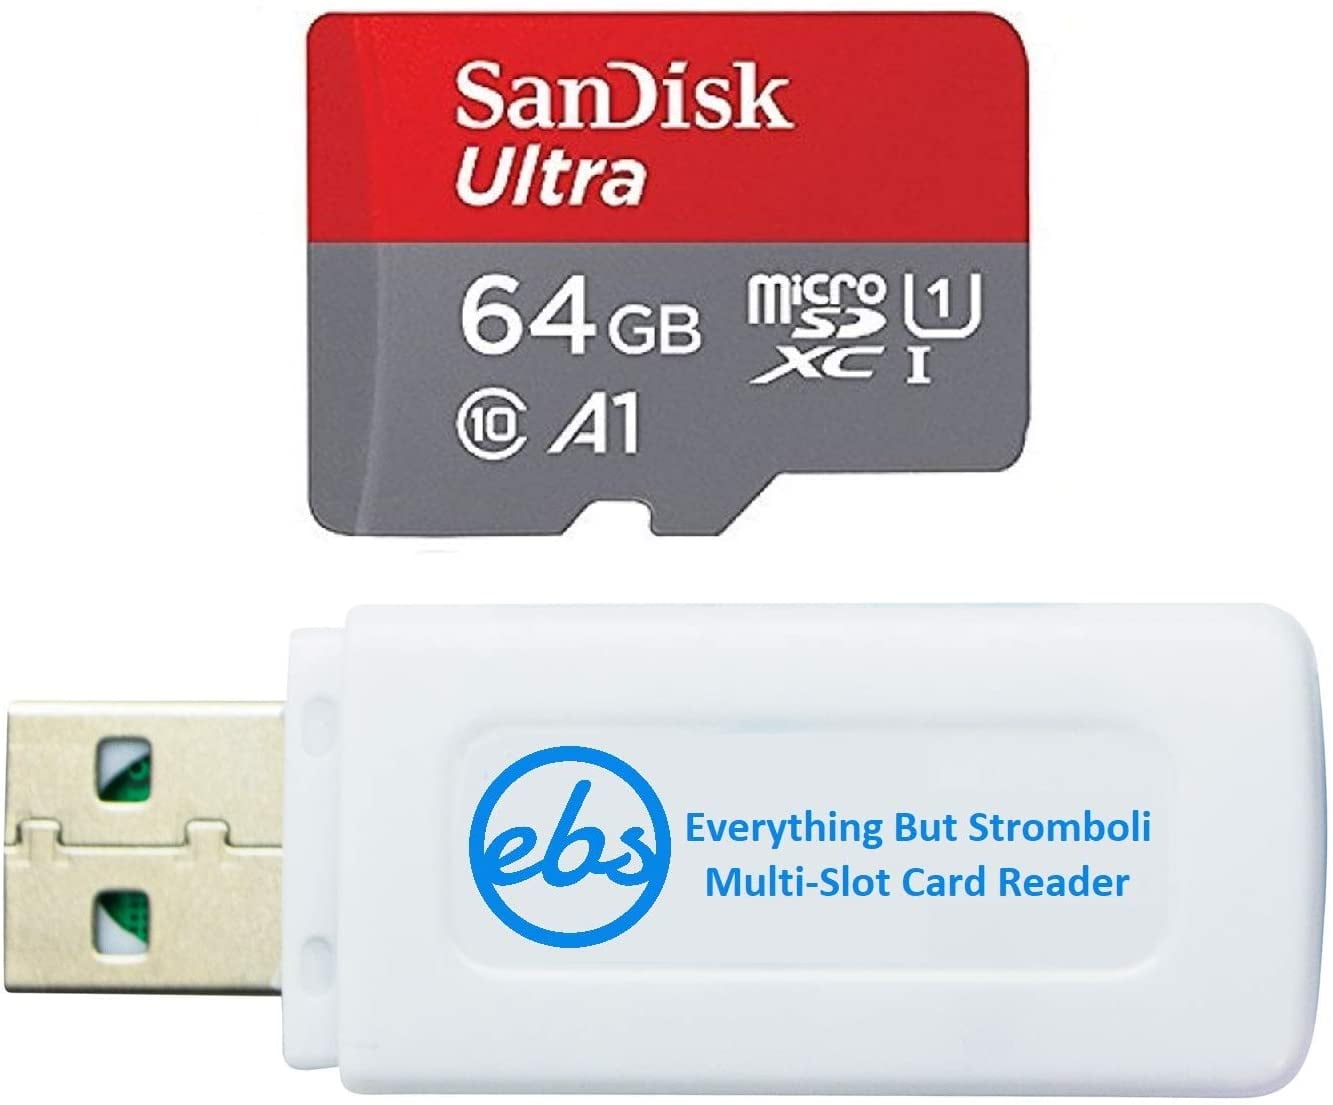 SanDisk Ultra 64GB Micro SD Card for Motorola Phone Works